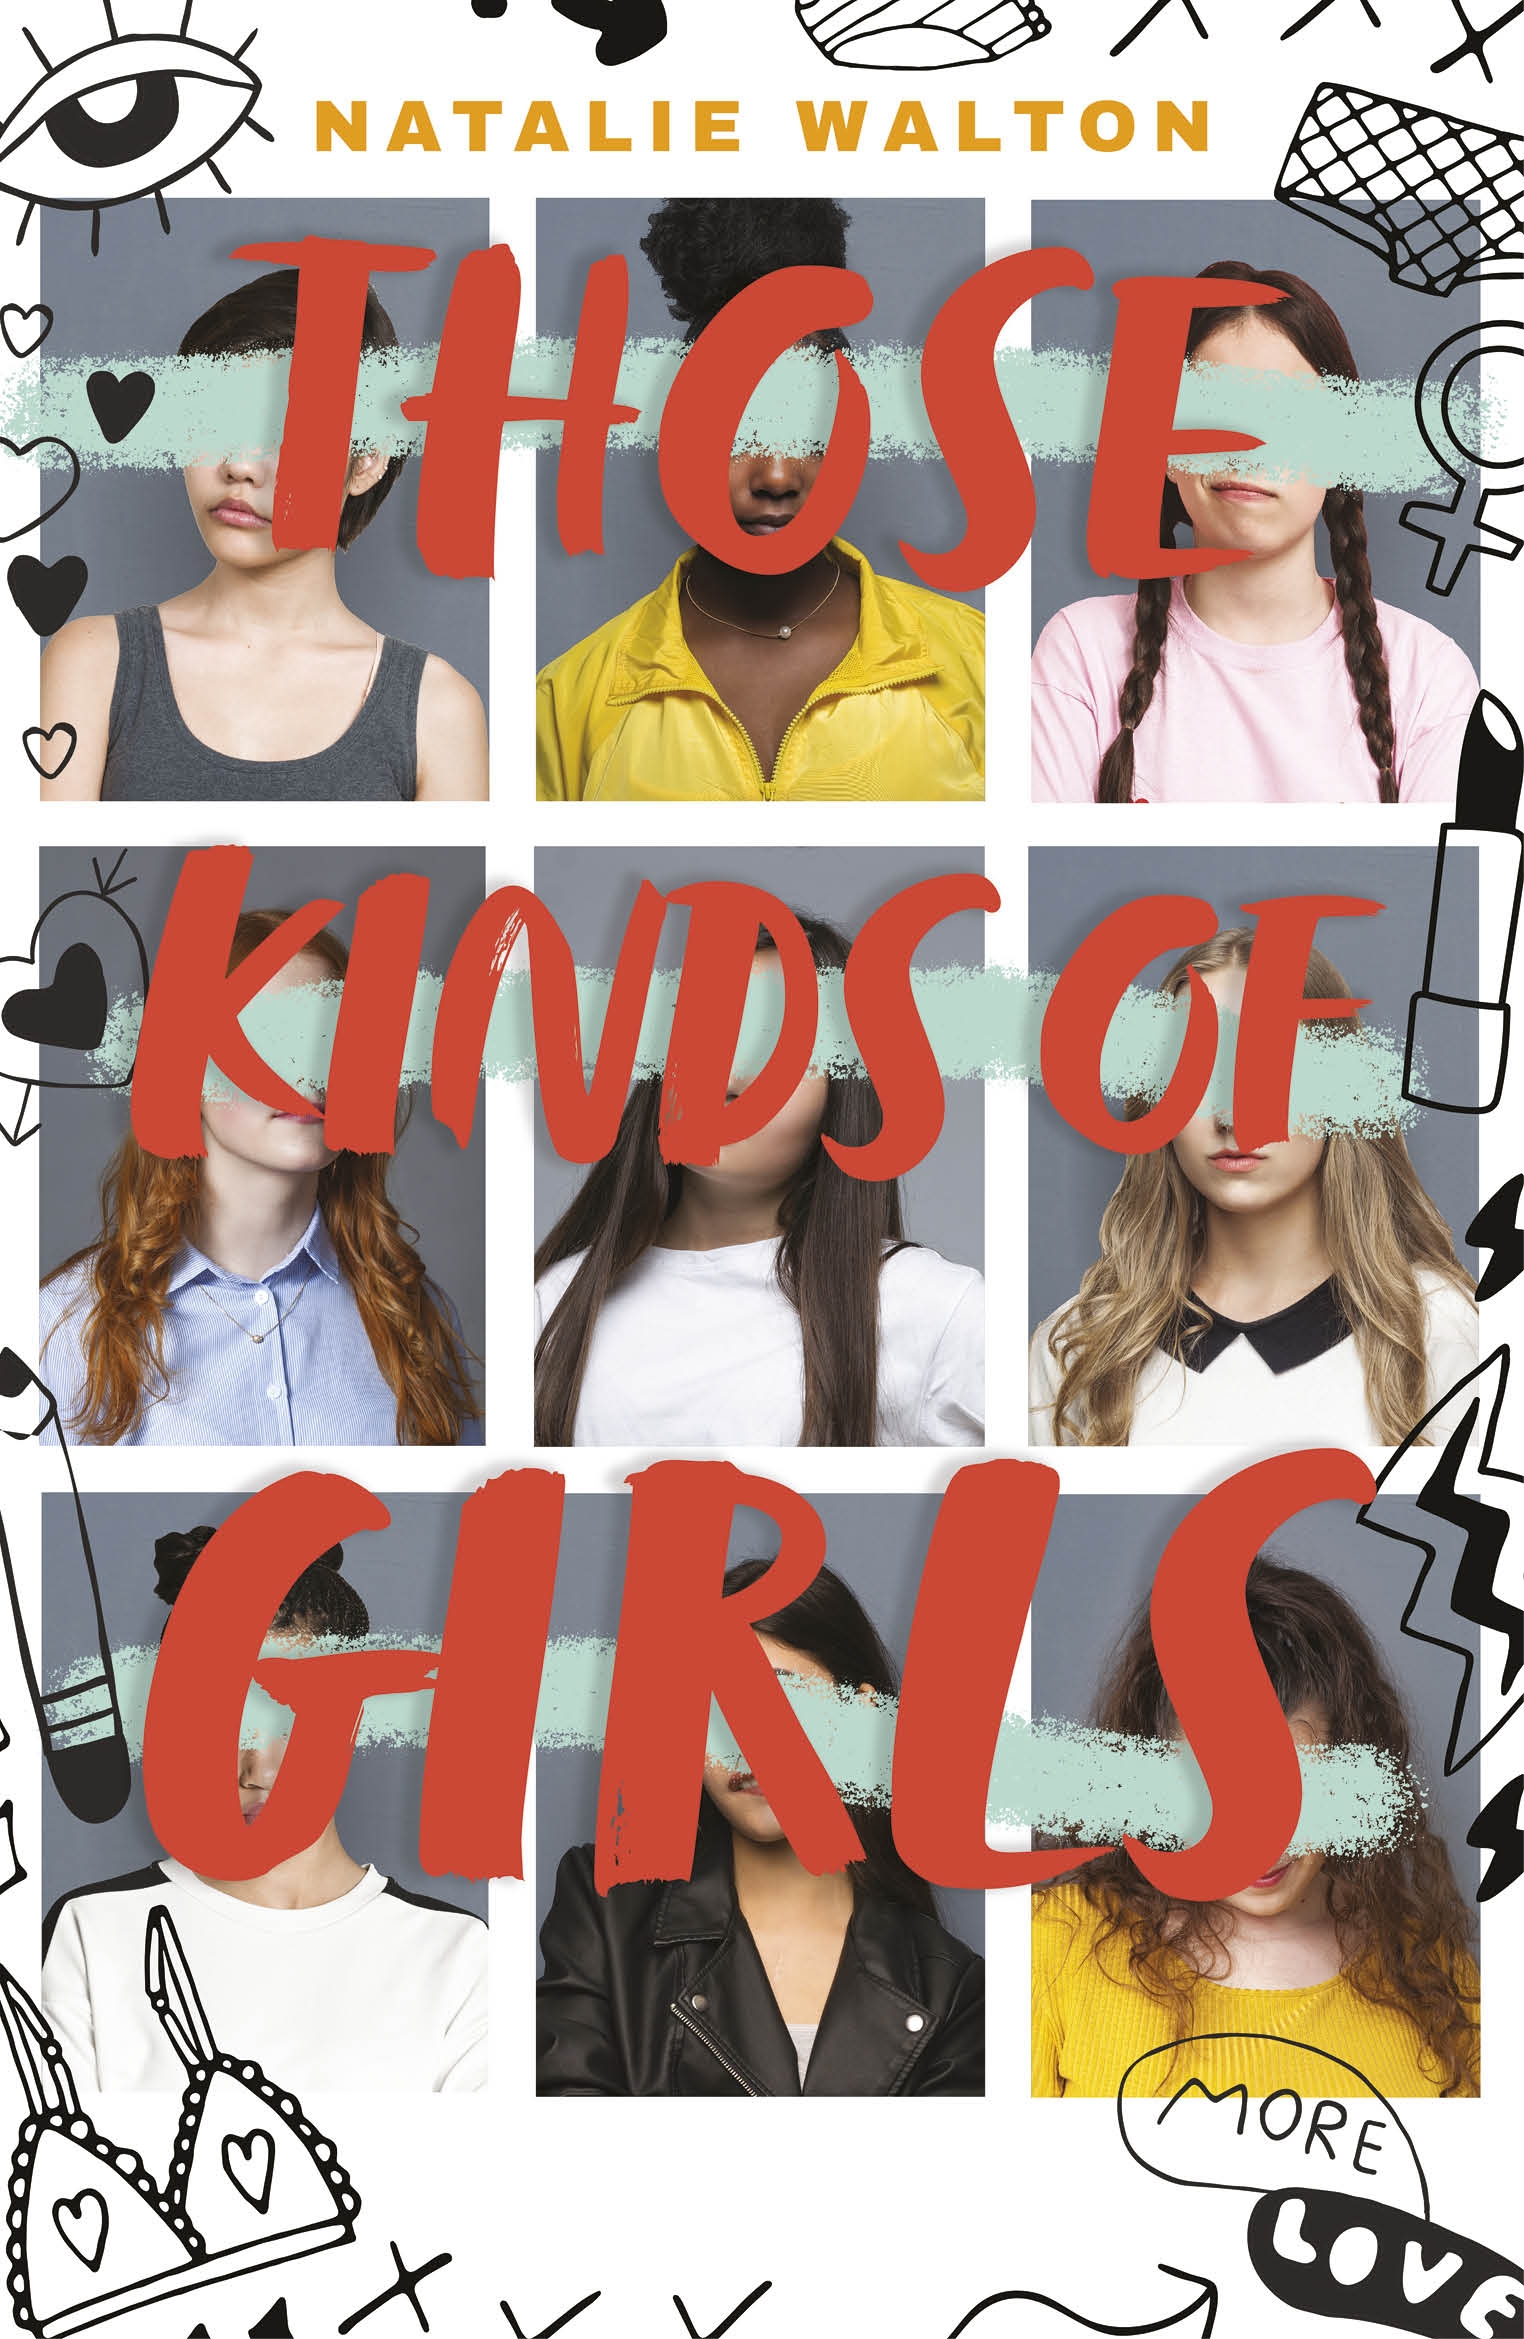 Those Kinds of Girls by Natalie Walton